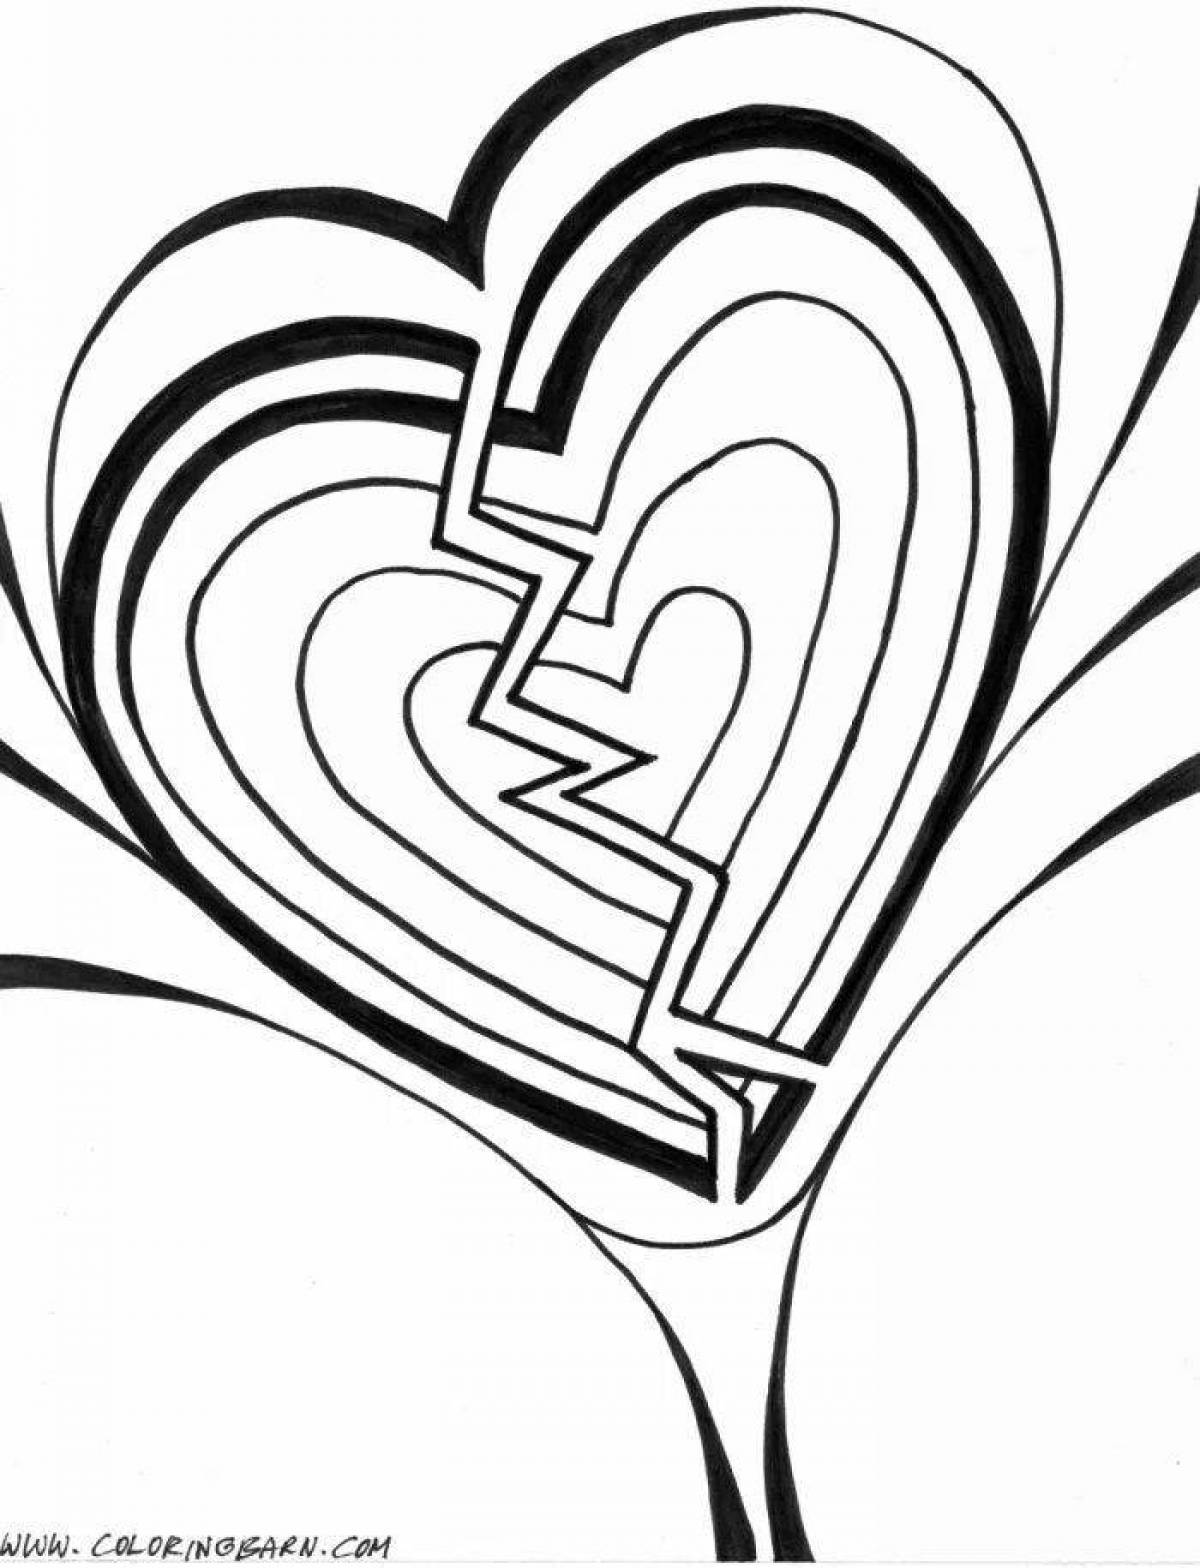 Great broken heart coloring page